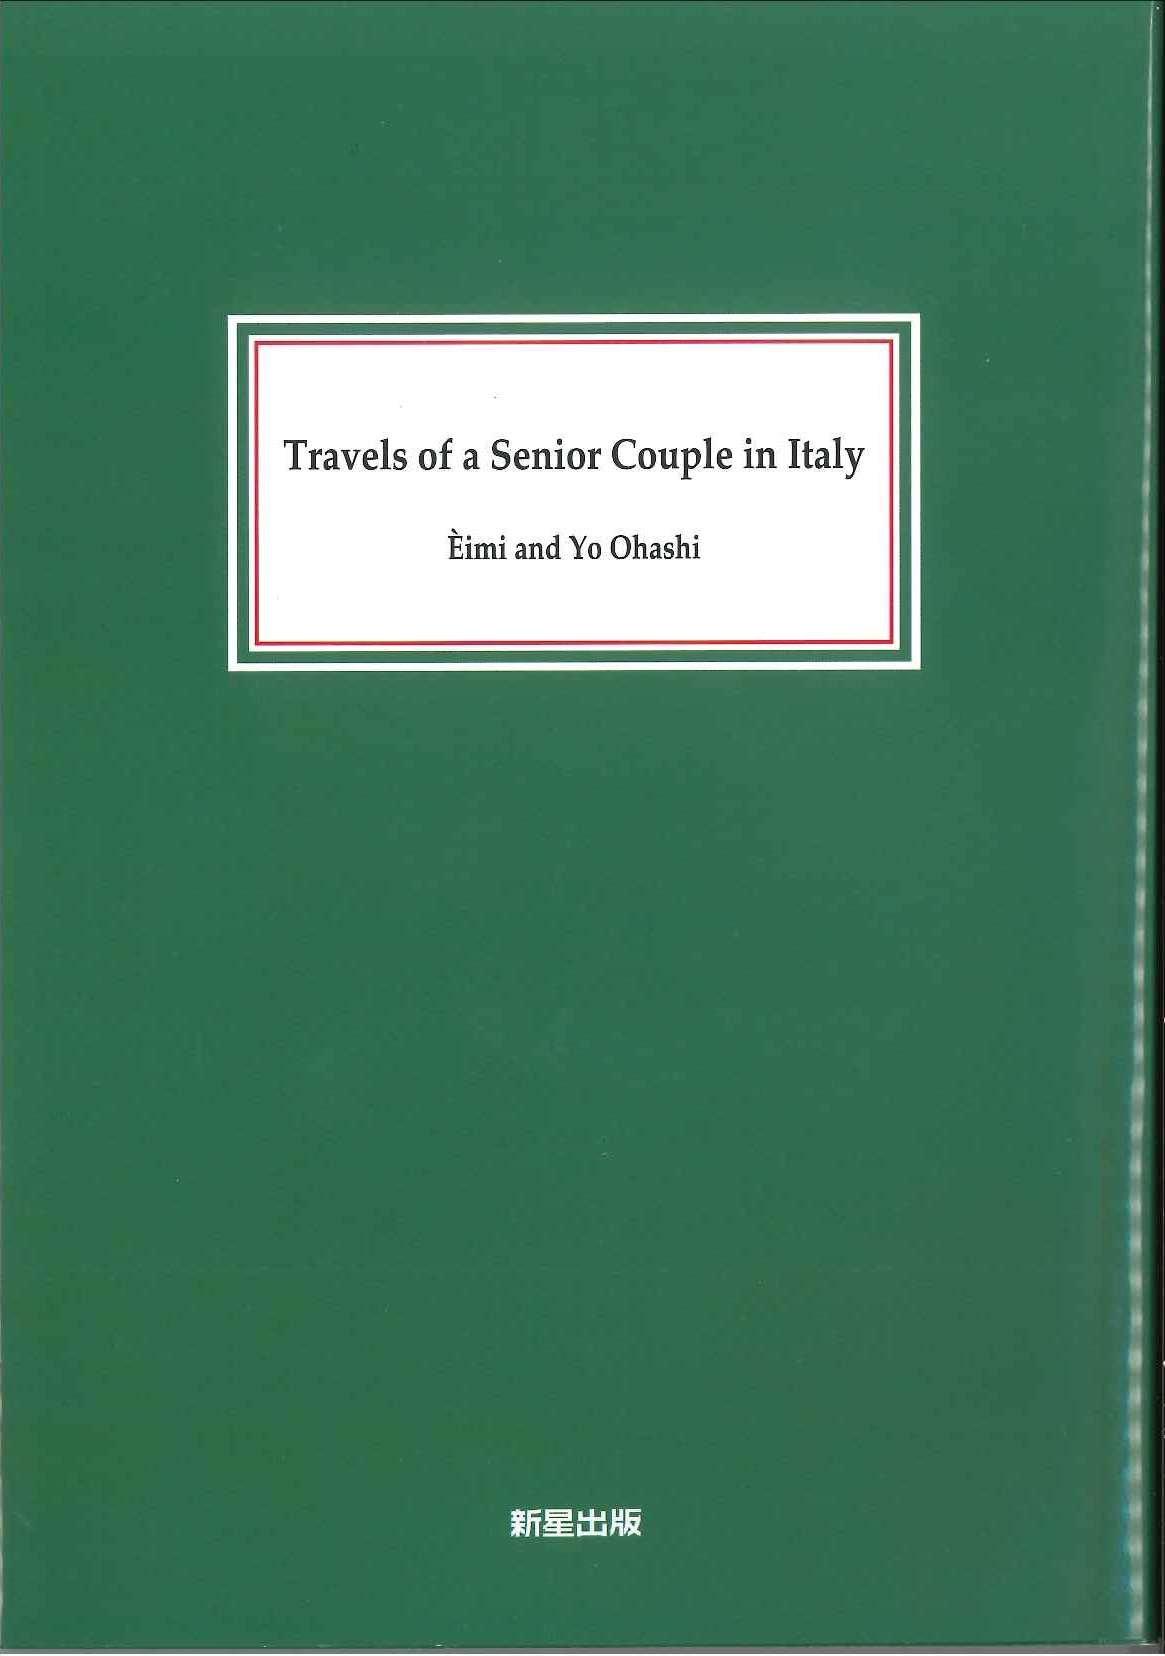 Travels of a Senior Couple in Italy（おっちゃんとインチョウのイタリア旅行）